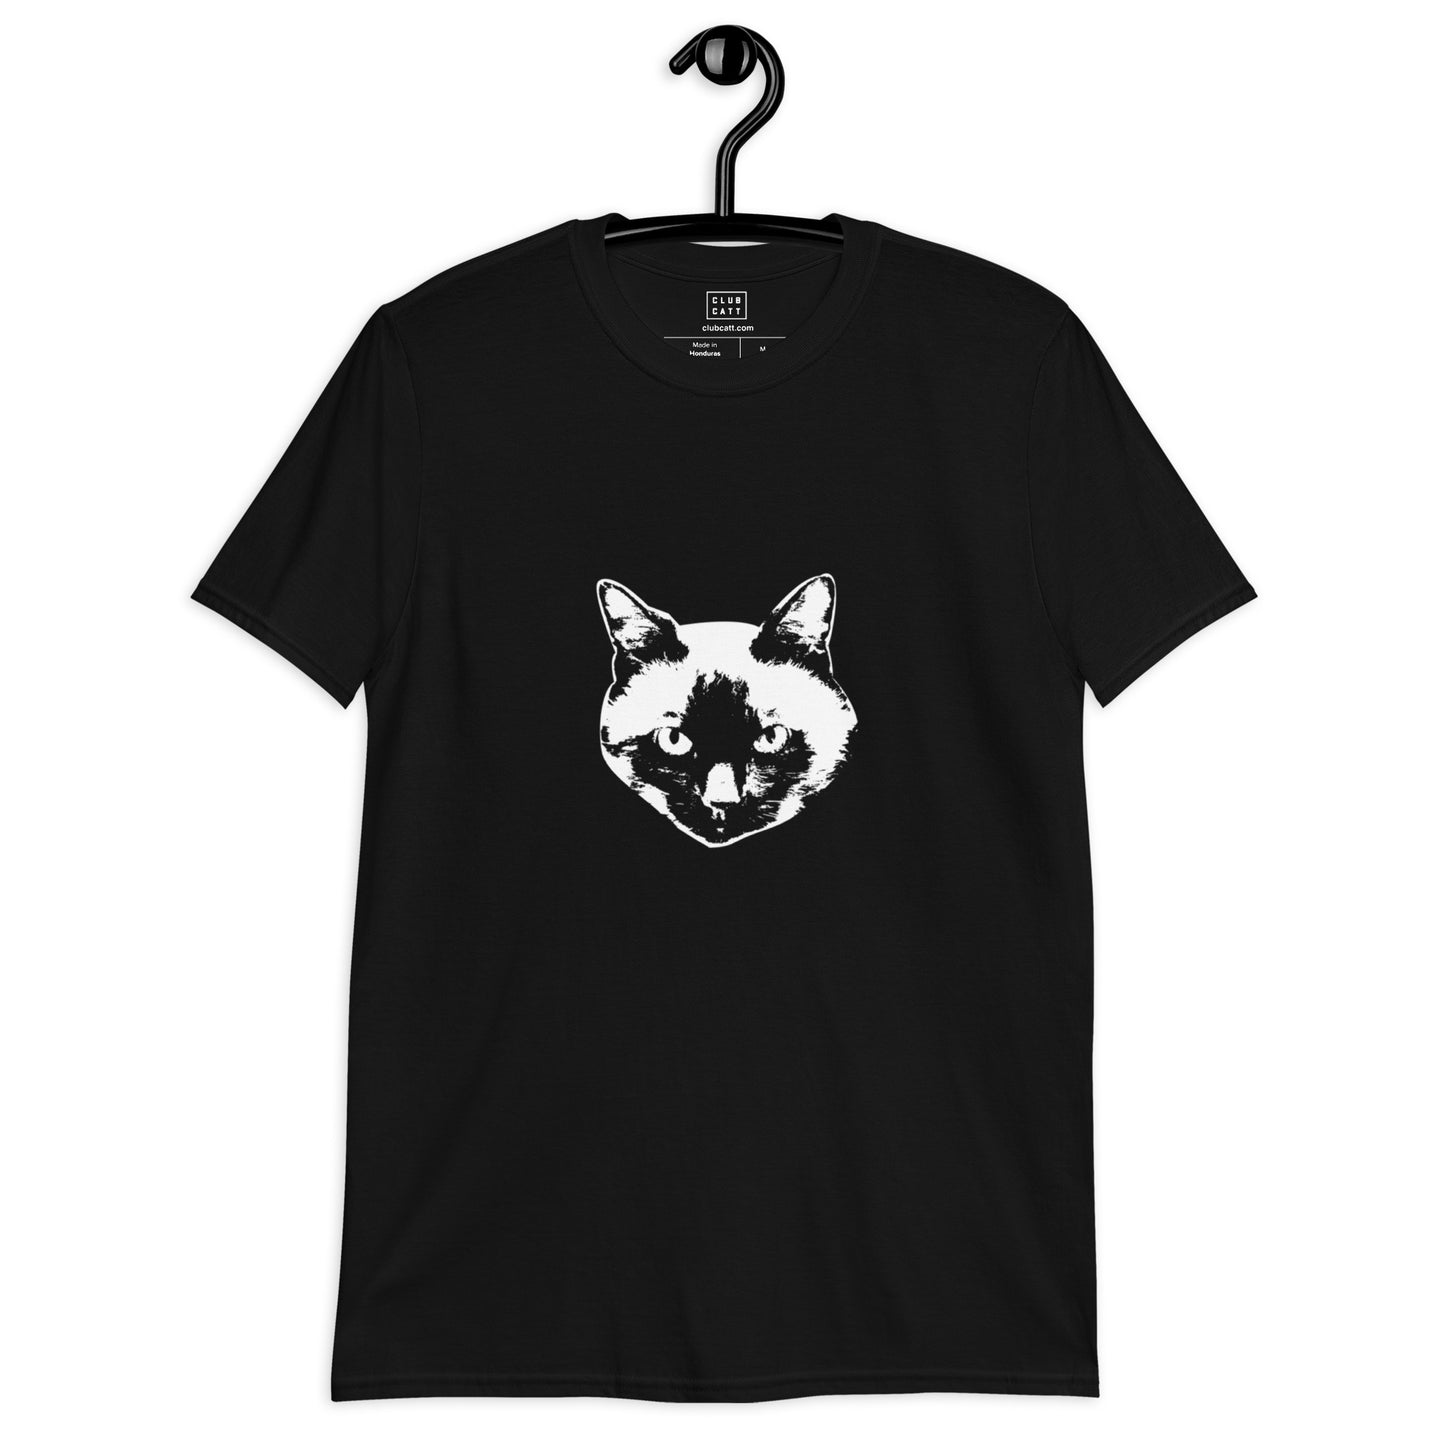 MISS KITTY Cat on T-Shirt